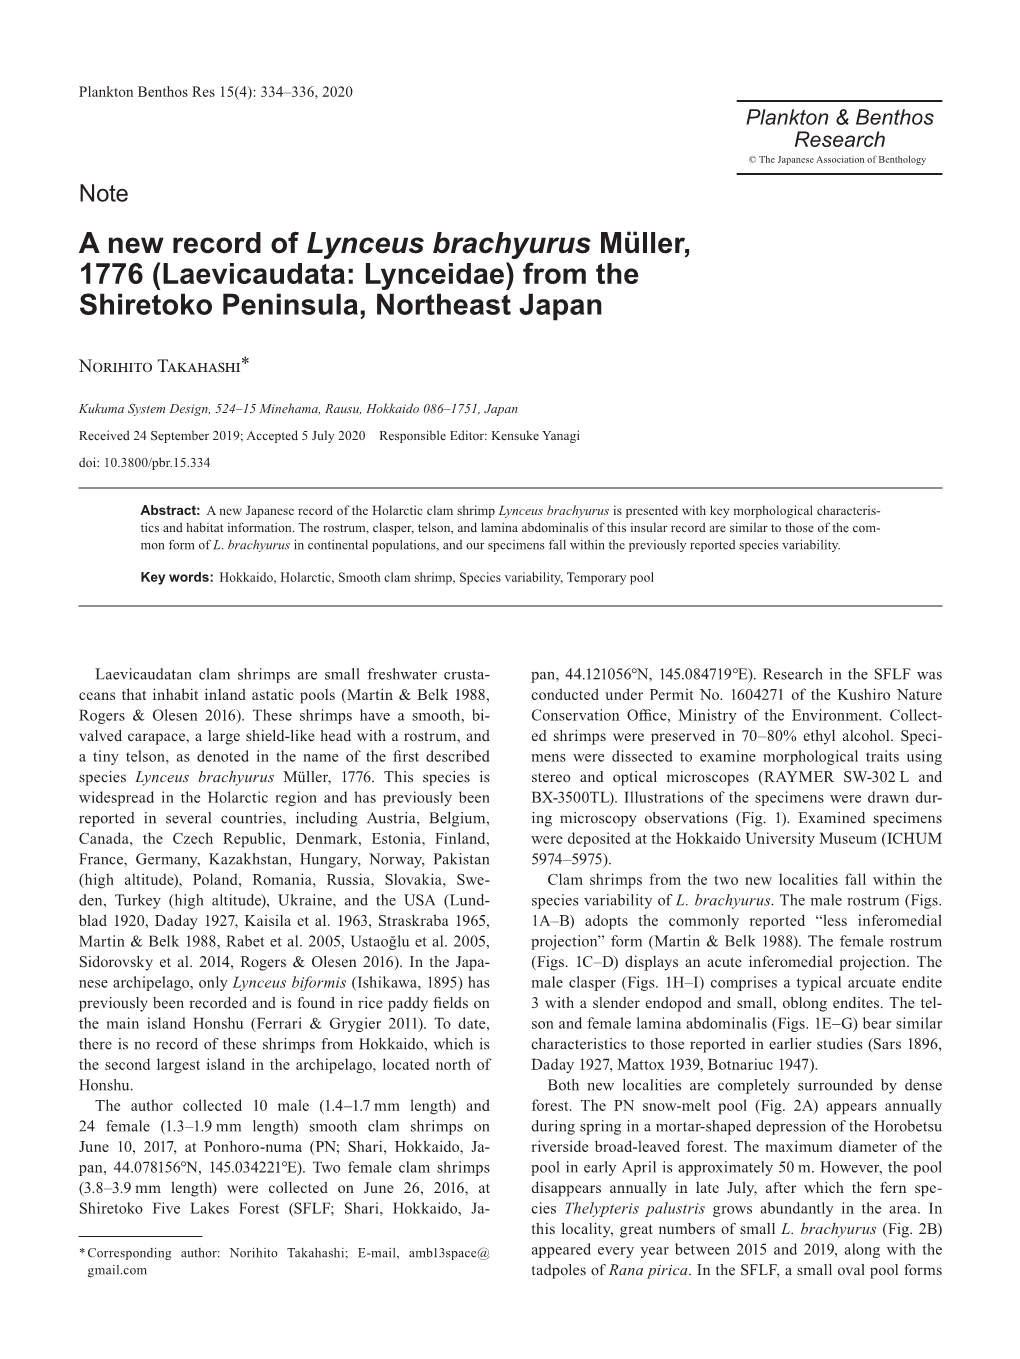 A New Record of Lynceus Brachyurus Müller, 1776 (Laevicaudata: Lynceidae) from the Shiretoko Peninsula, Northeast Japan